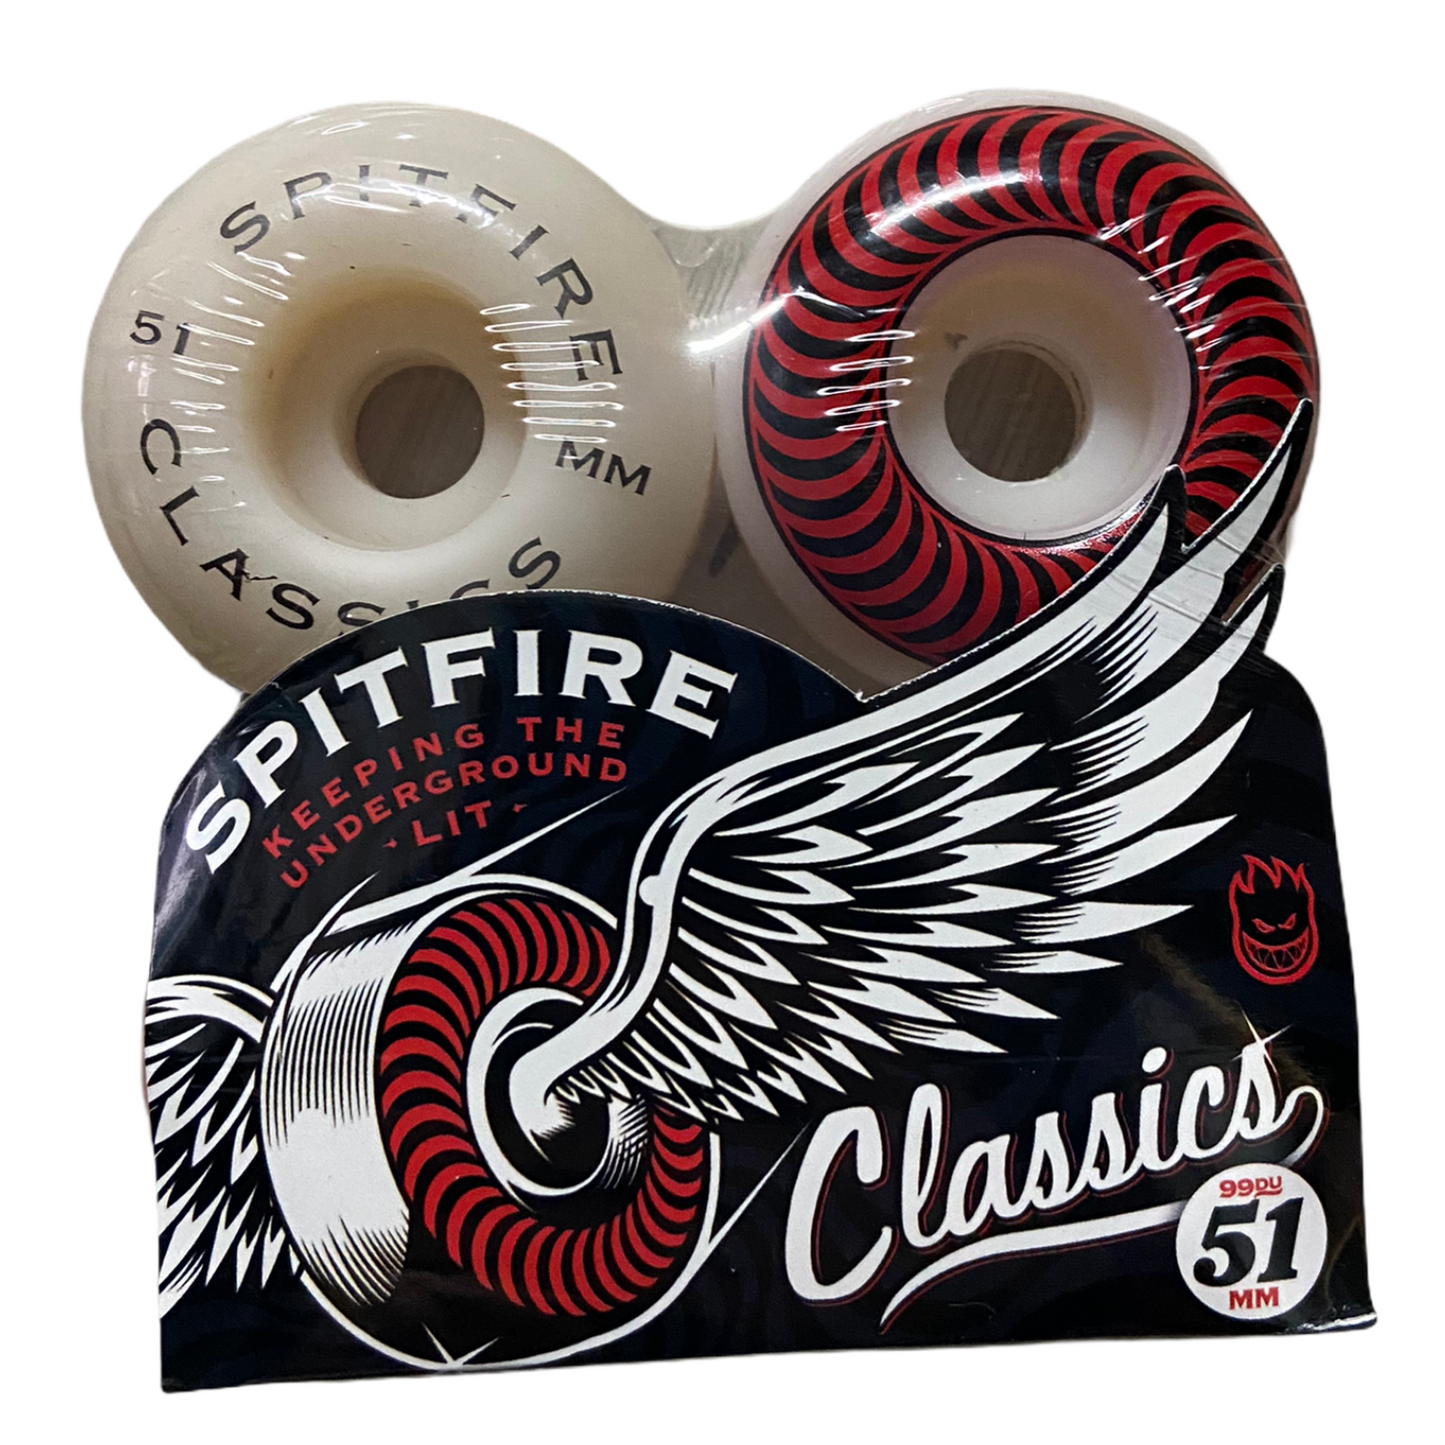 Spitfire Classic- 51mm